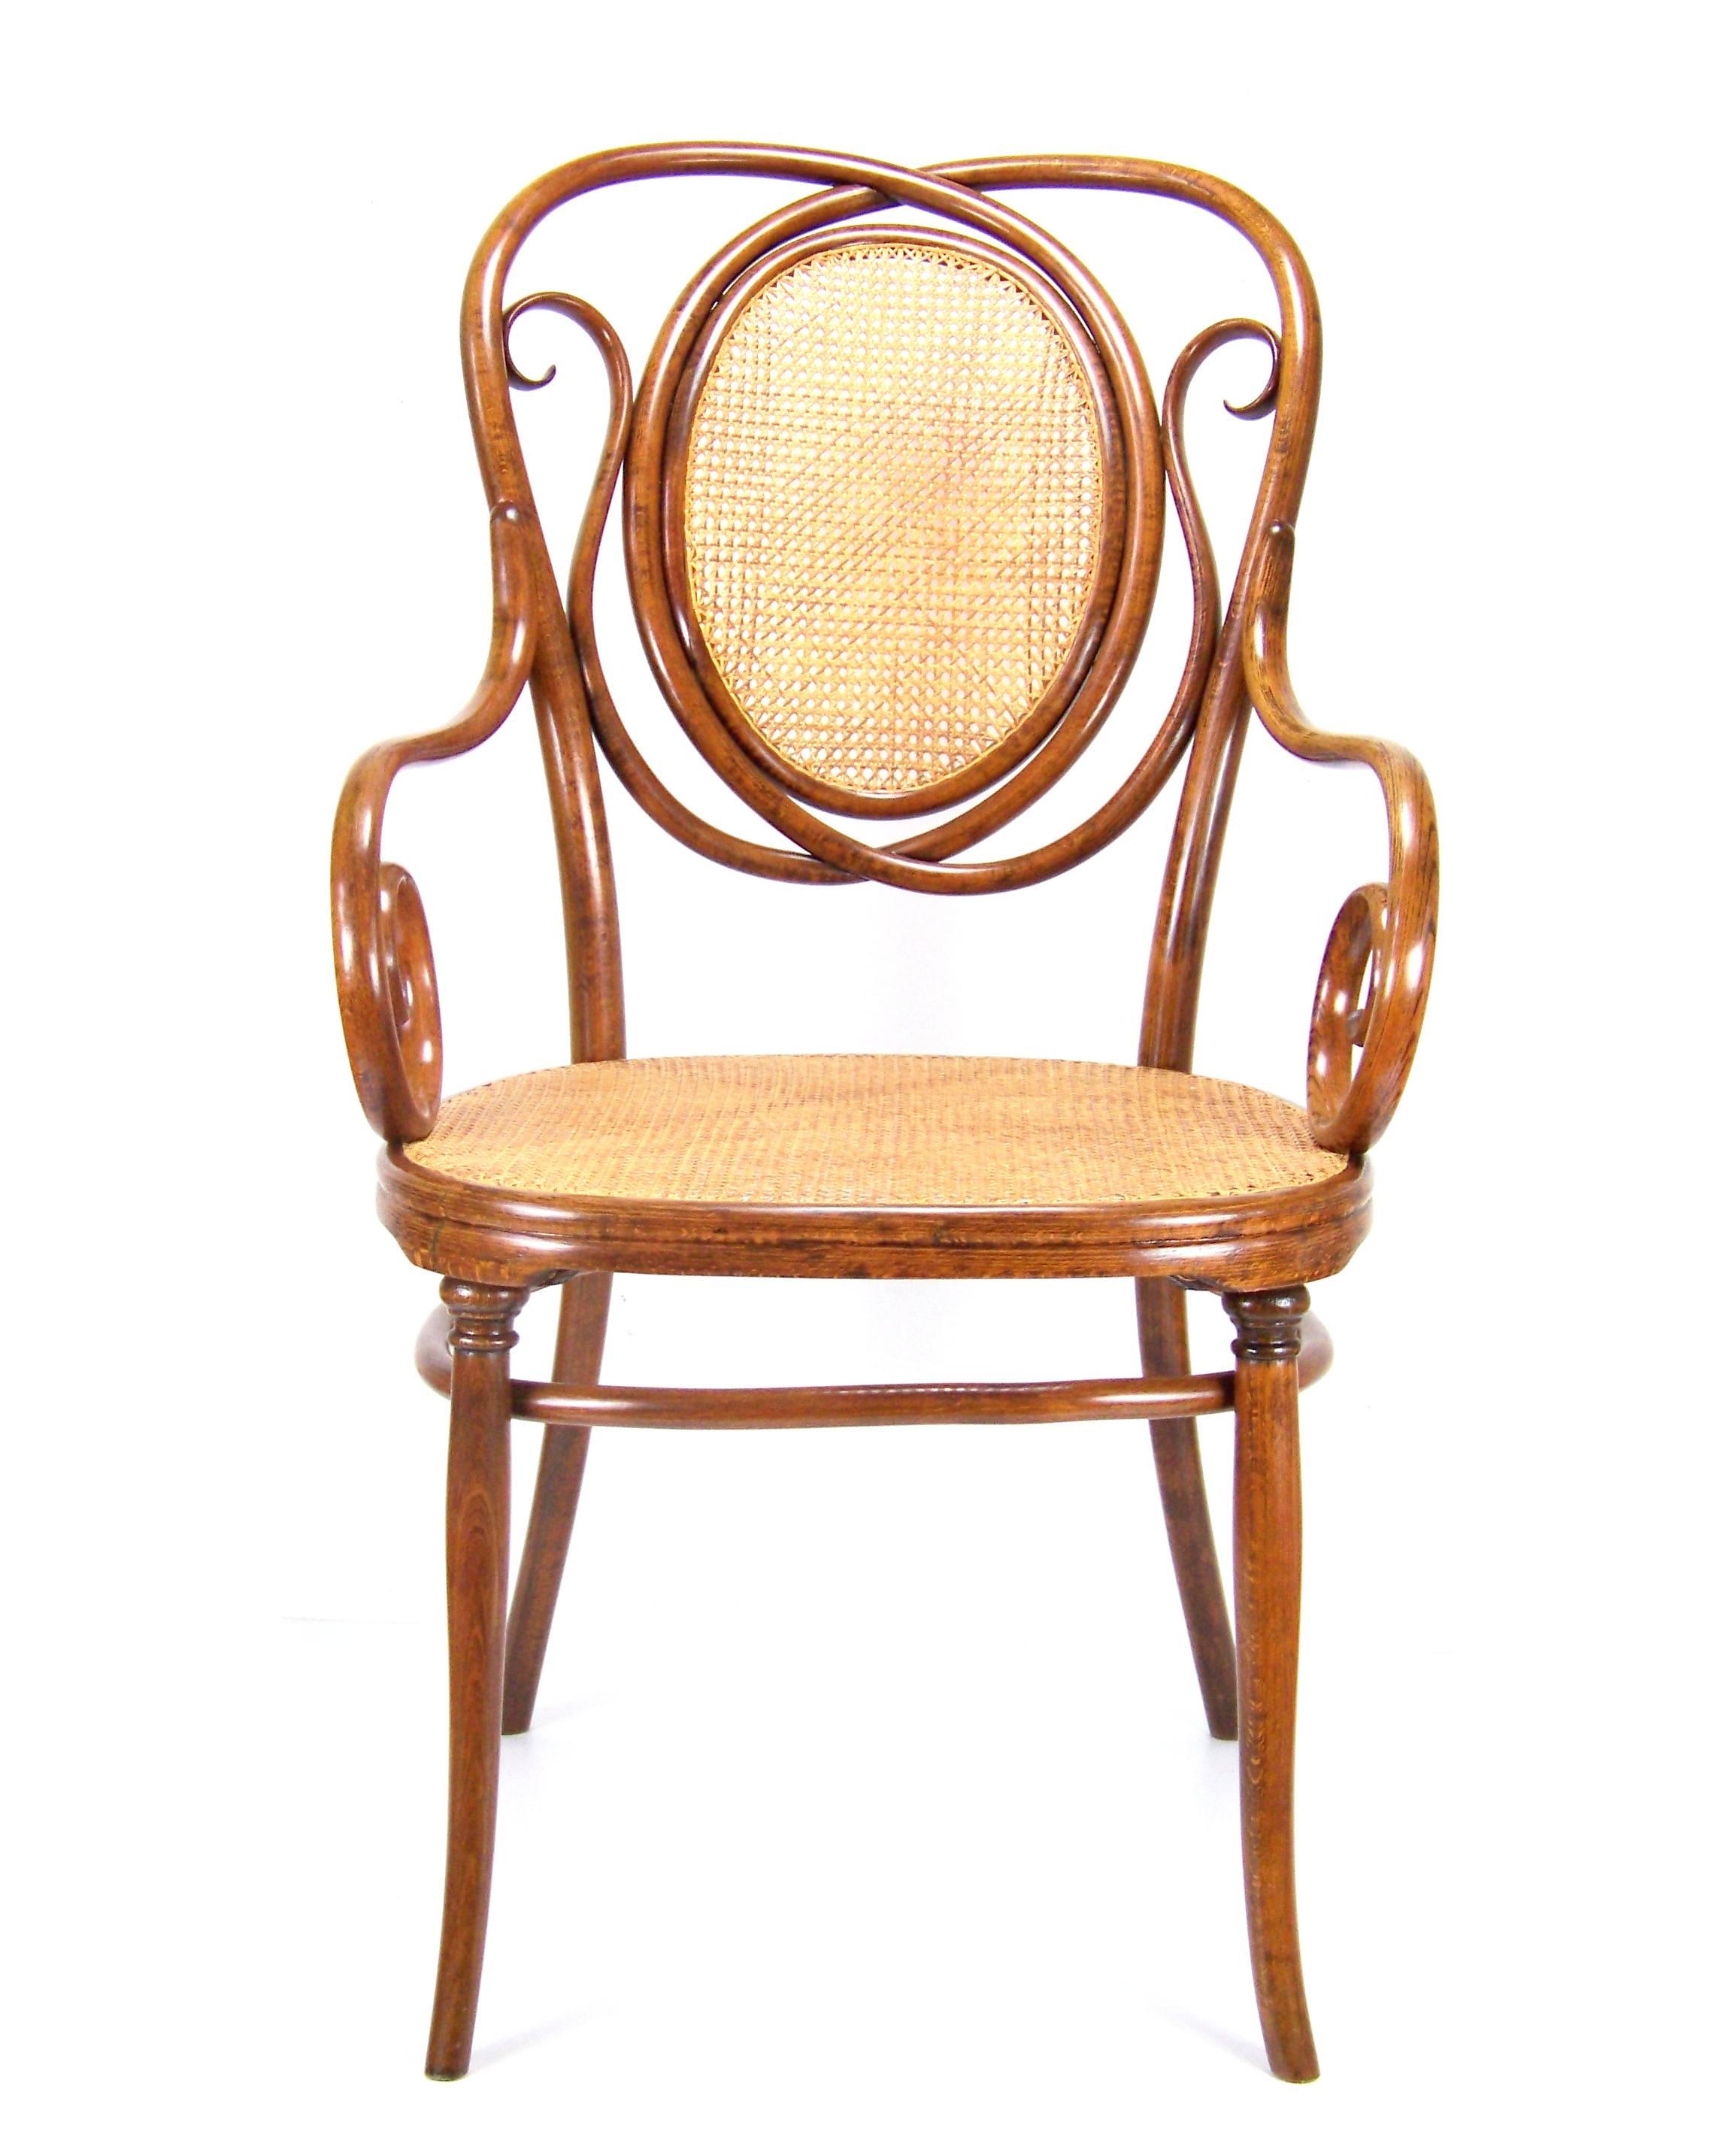 Seltener Sessel Thonet Nr. 22, ca. 1887-1910 (Art nouveau) im Angebot